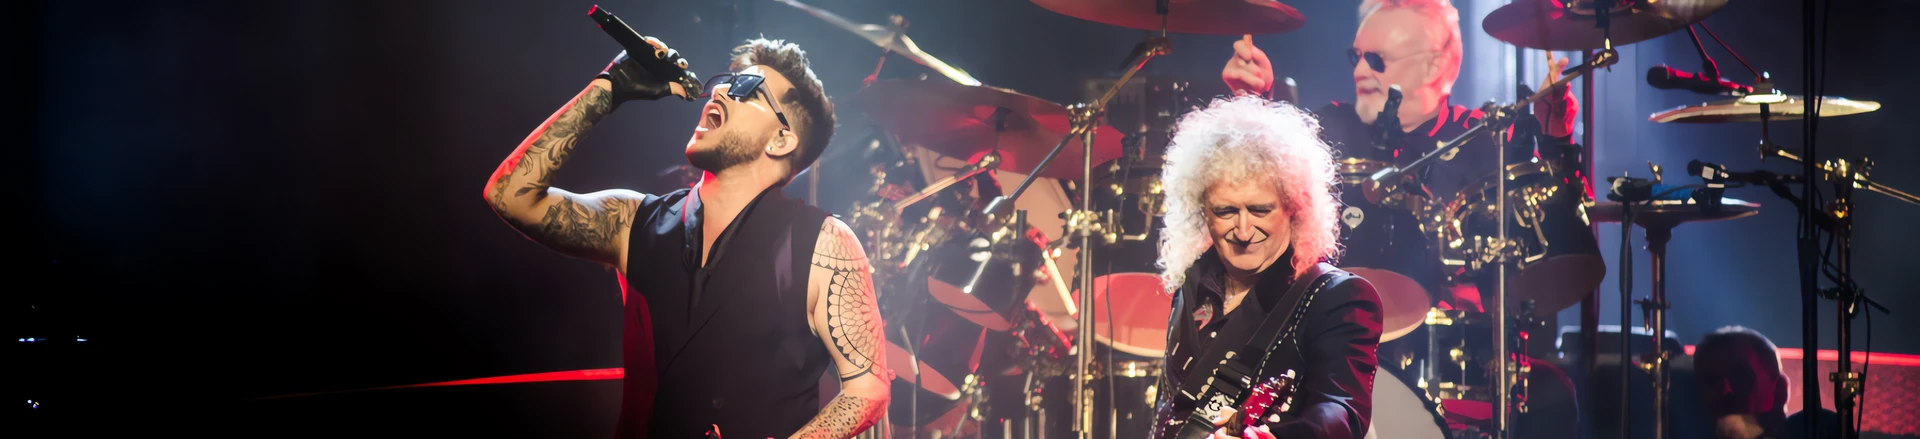 RELACJA: Queen i Adam Lambert w Atlas Arenie